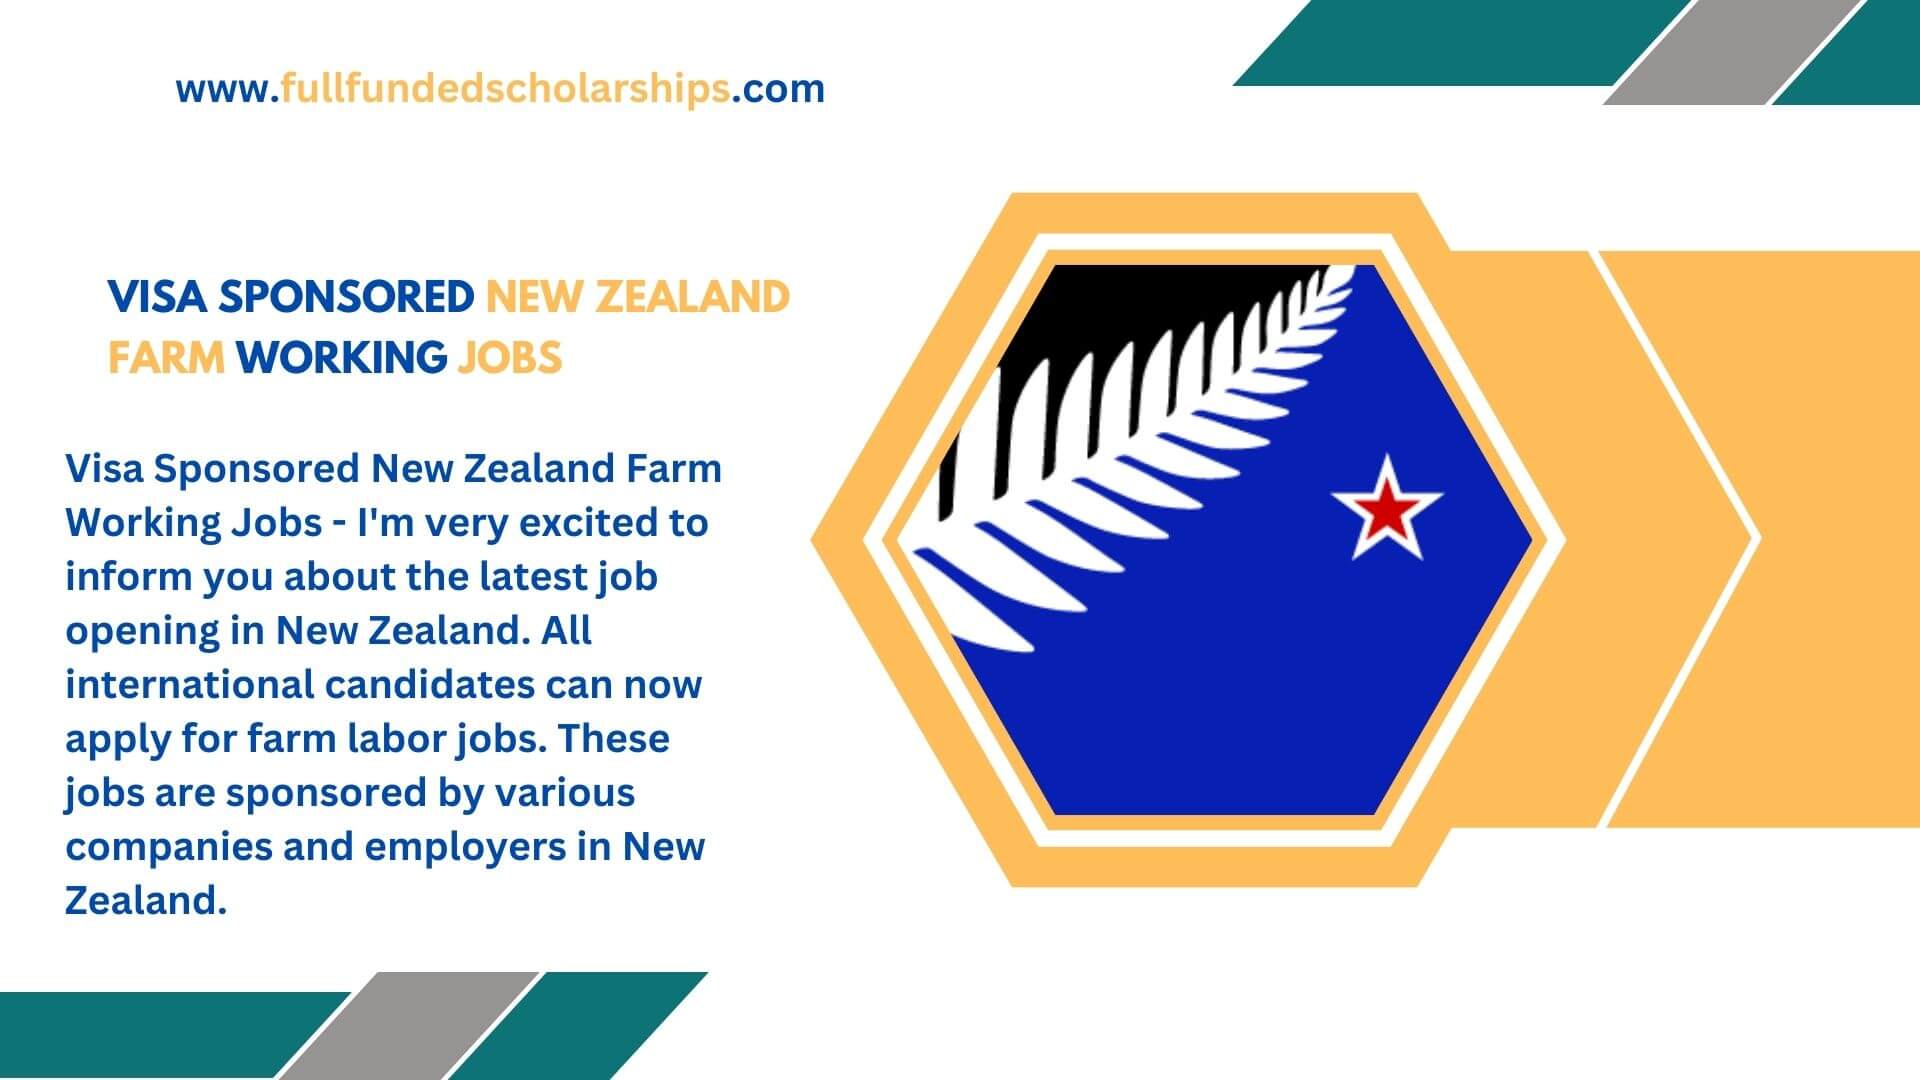 Visa Sponsored New Zealand Farm Working Jobs